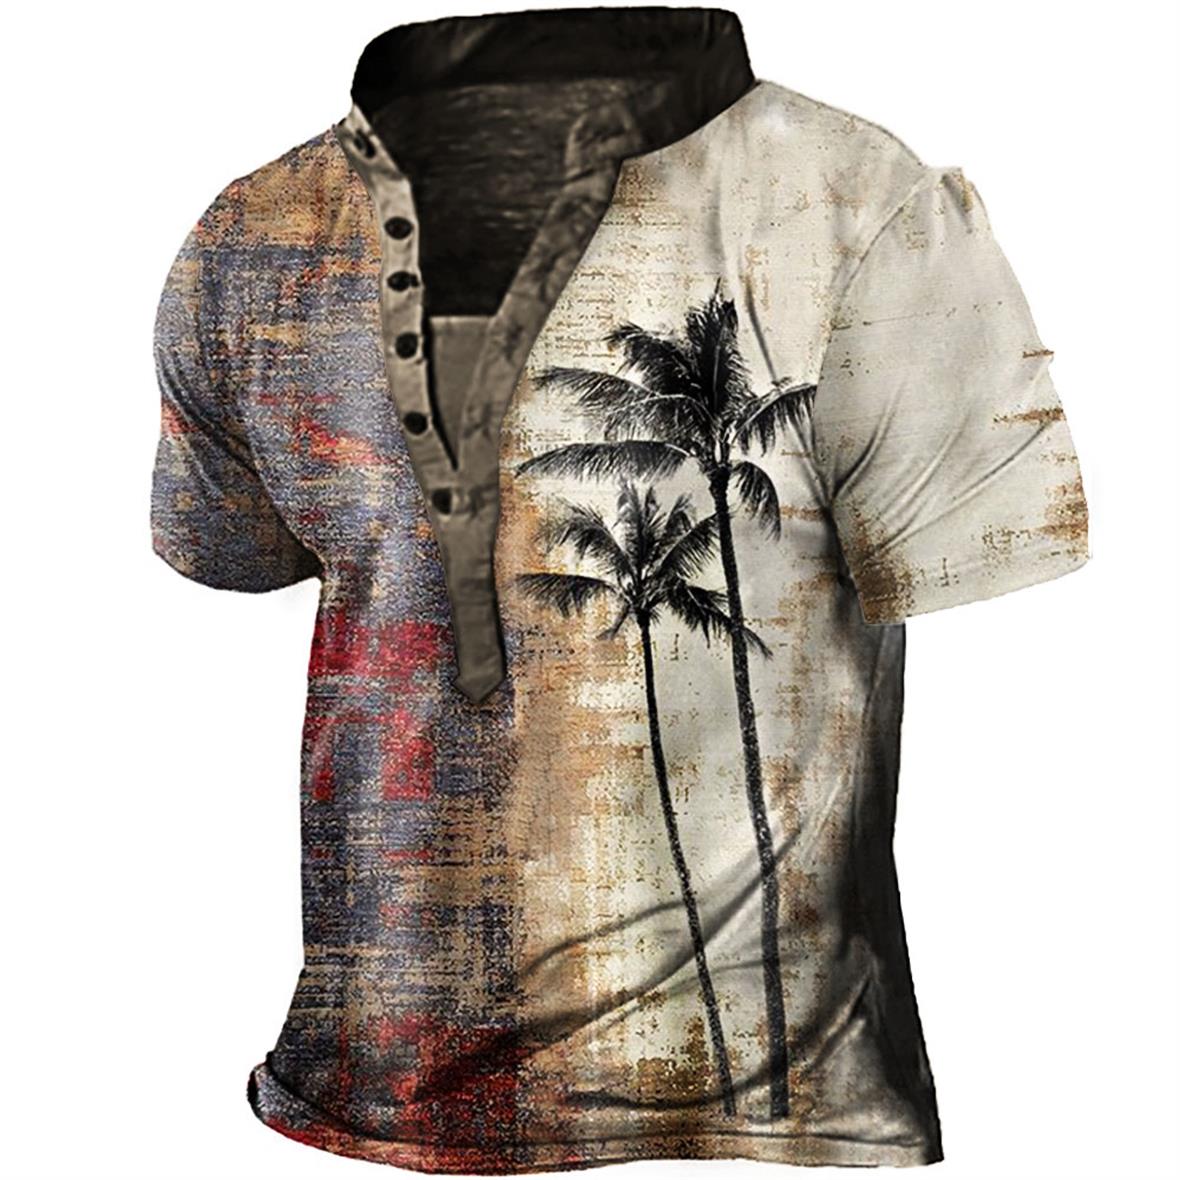 Men's Vintage Coconut Tree Print Chic Henley T-shirt